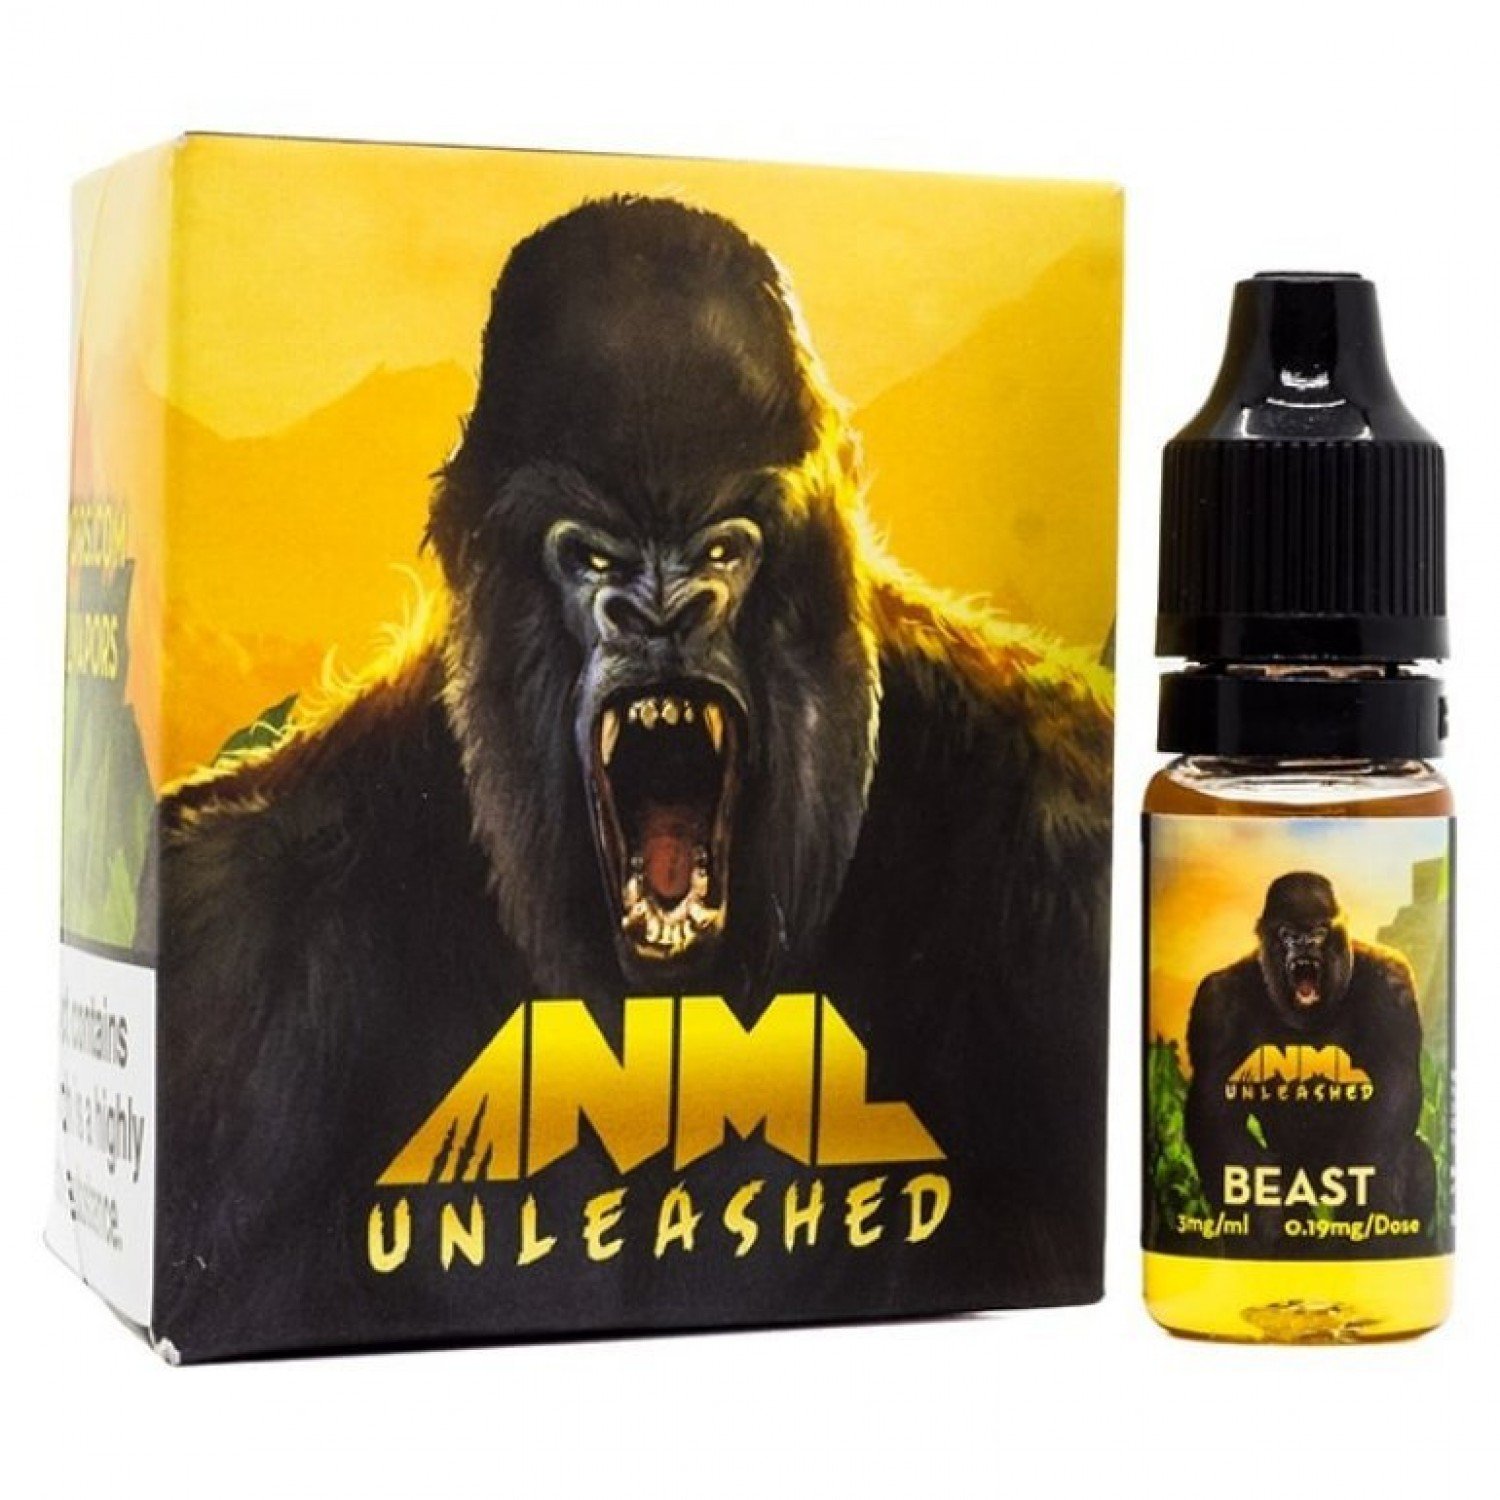 ANML Unleashed - Beast 6x10ML Premium Likit